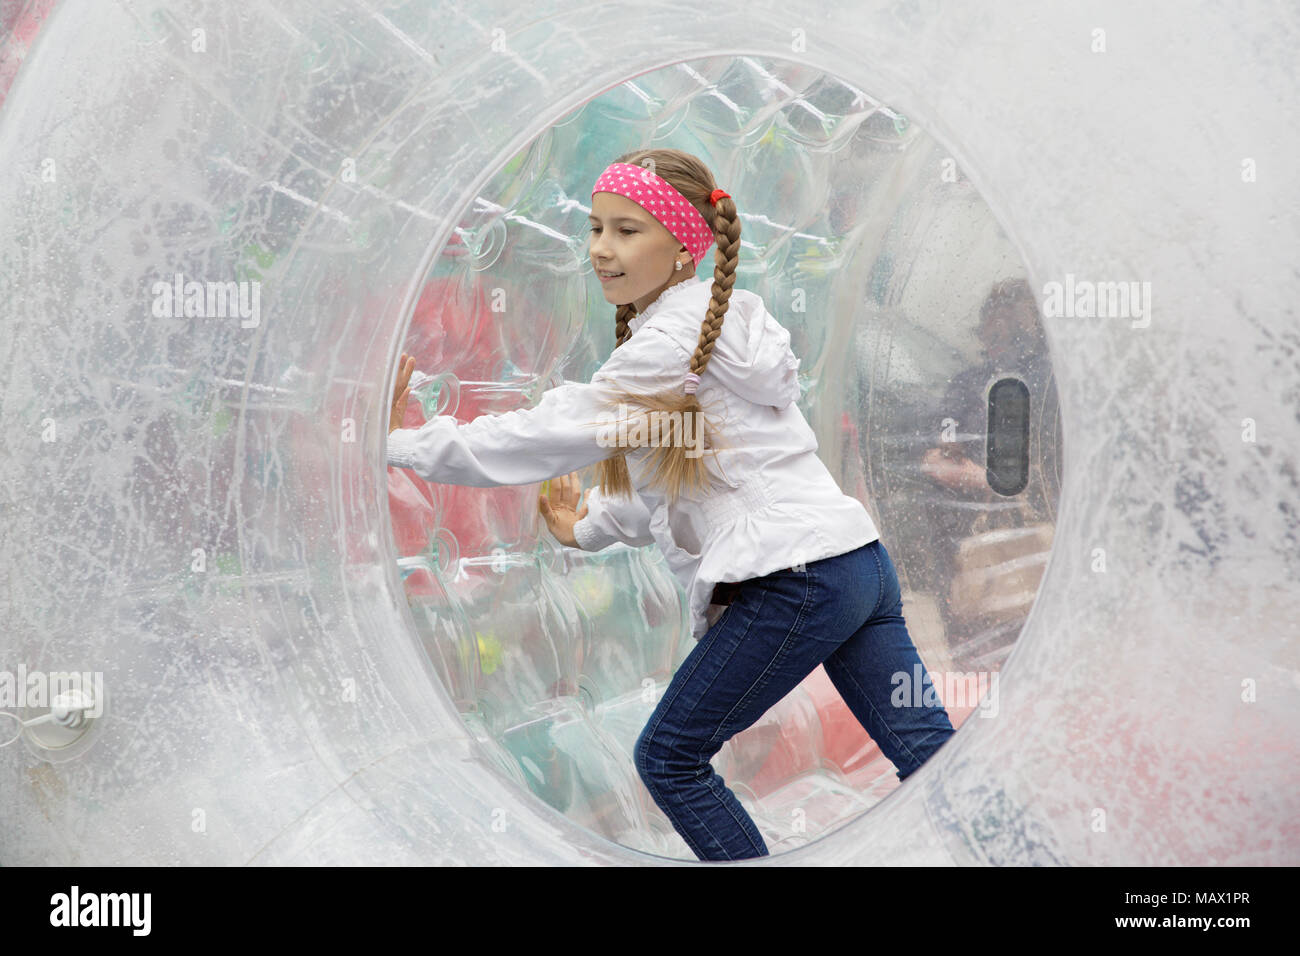 Teen girl heureusement s'exécute dans un grand cylindre gonflable zorb- Banque D'Images